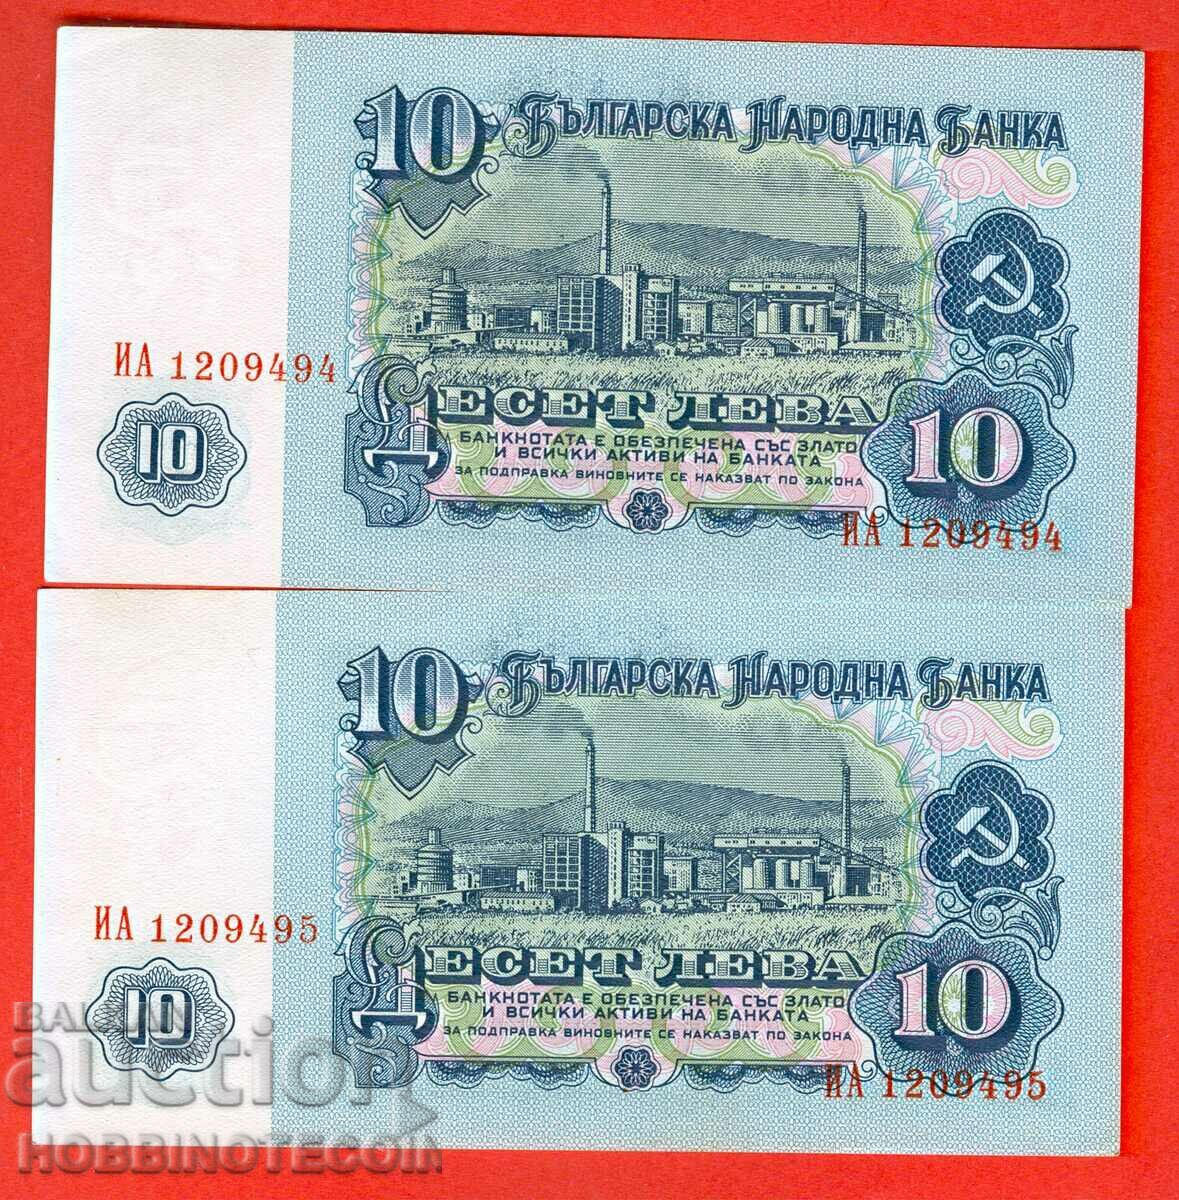 BULGARIA BULGARIA 2 x 10 Leva 7 ψηφία ΣΕΙΡΙΚΟΣ ΑΡΙΘΜΟΣ IA 1974 UNC